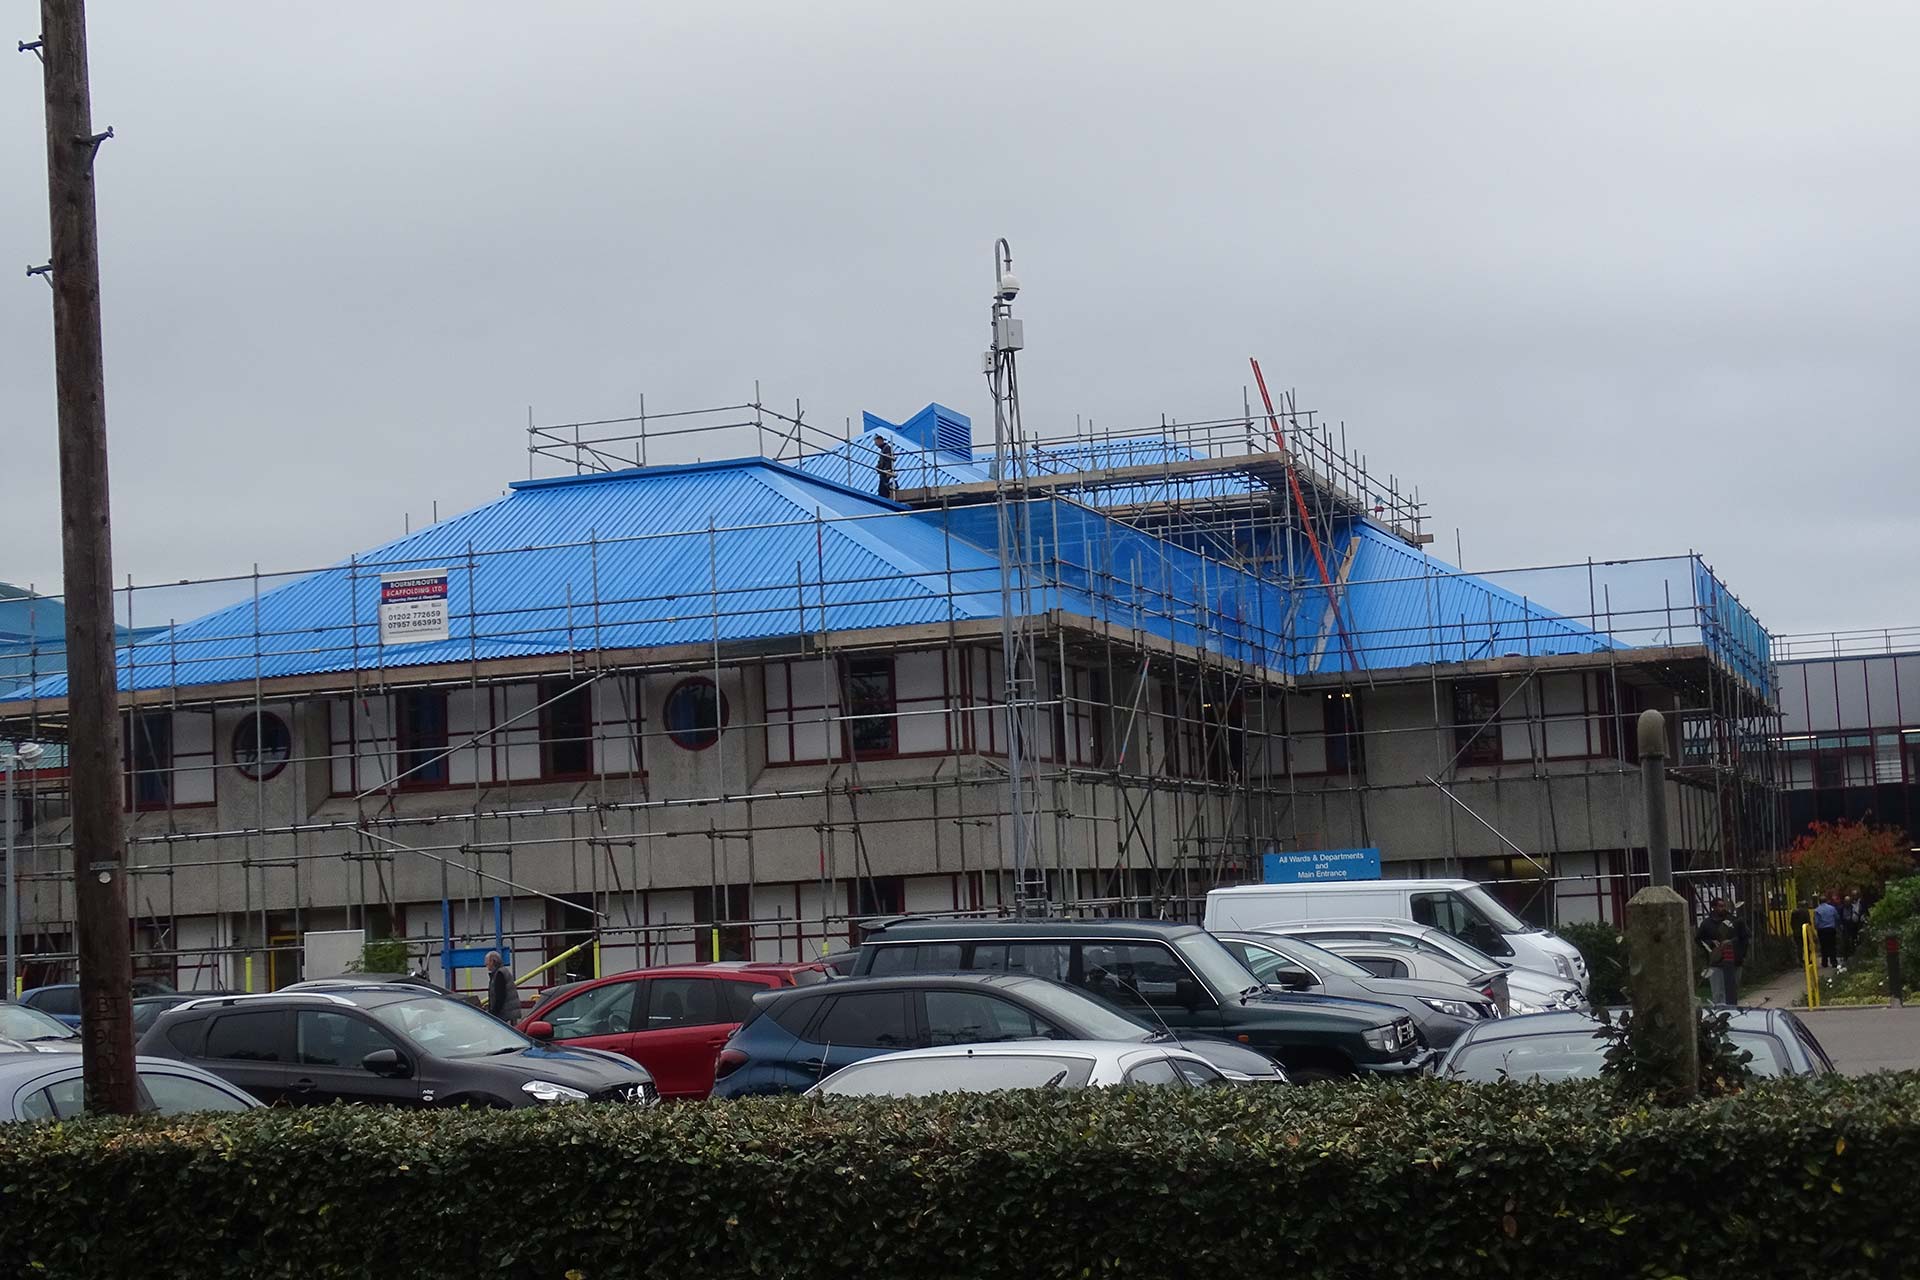 Royal Bournemouth Hospital - Bournemouth Scaffolding Ltd Project Work